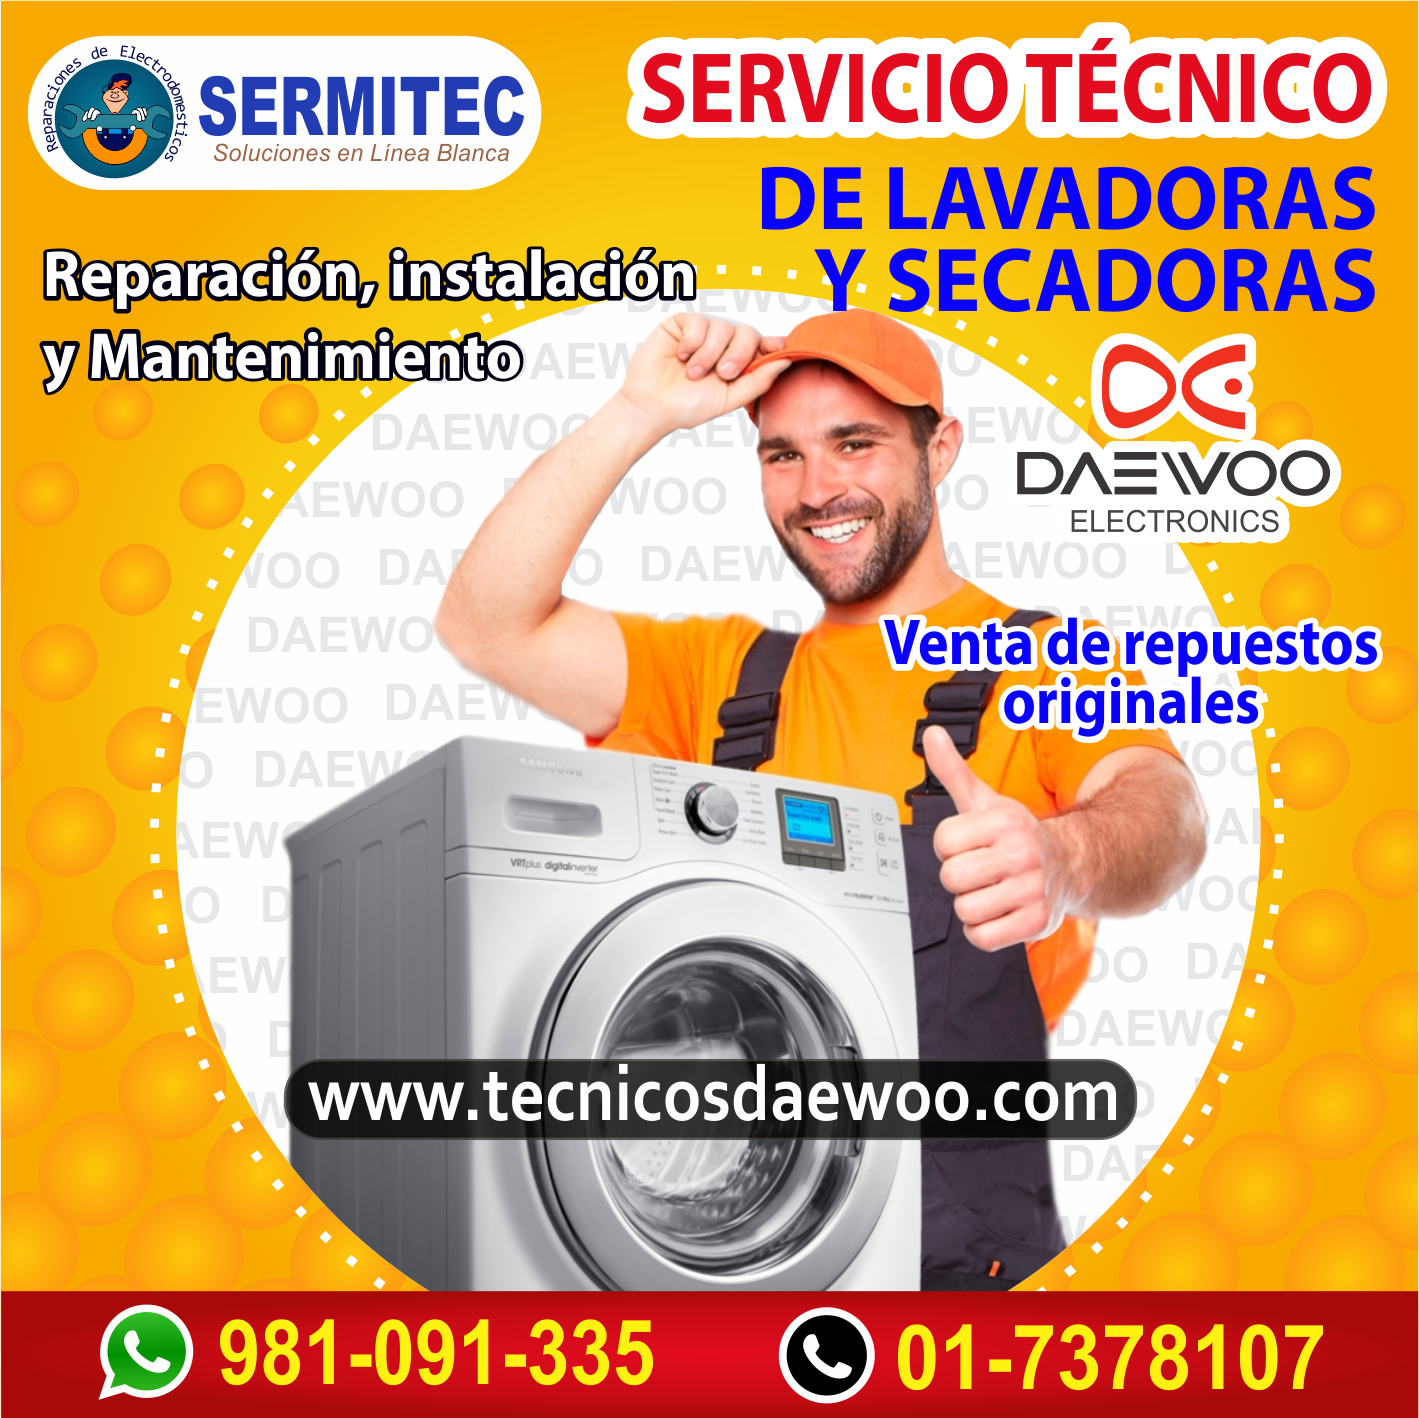 Técnicos a domicilio DAEWOO -  981091335 / LA PERLA CALLAO